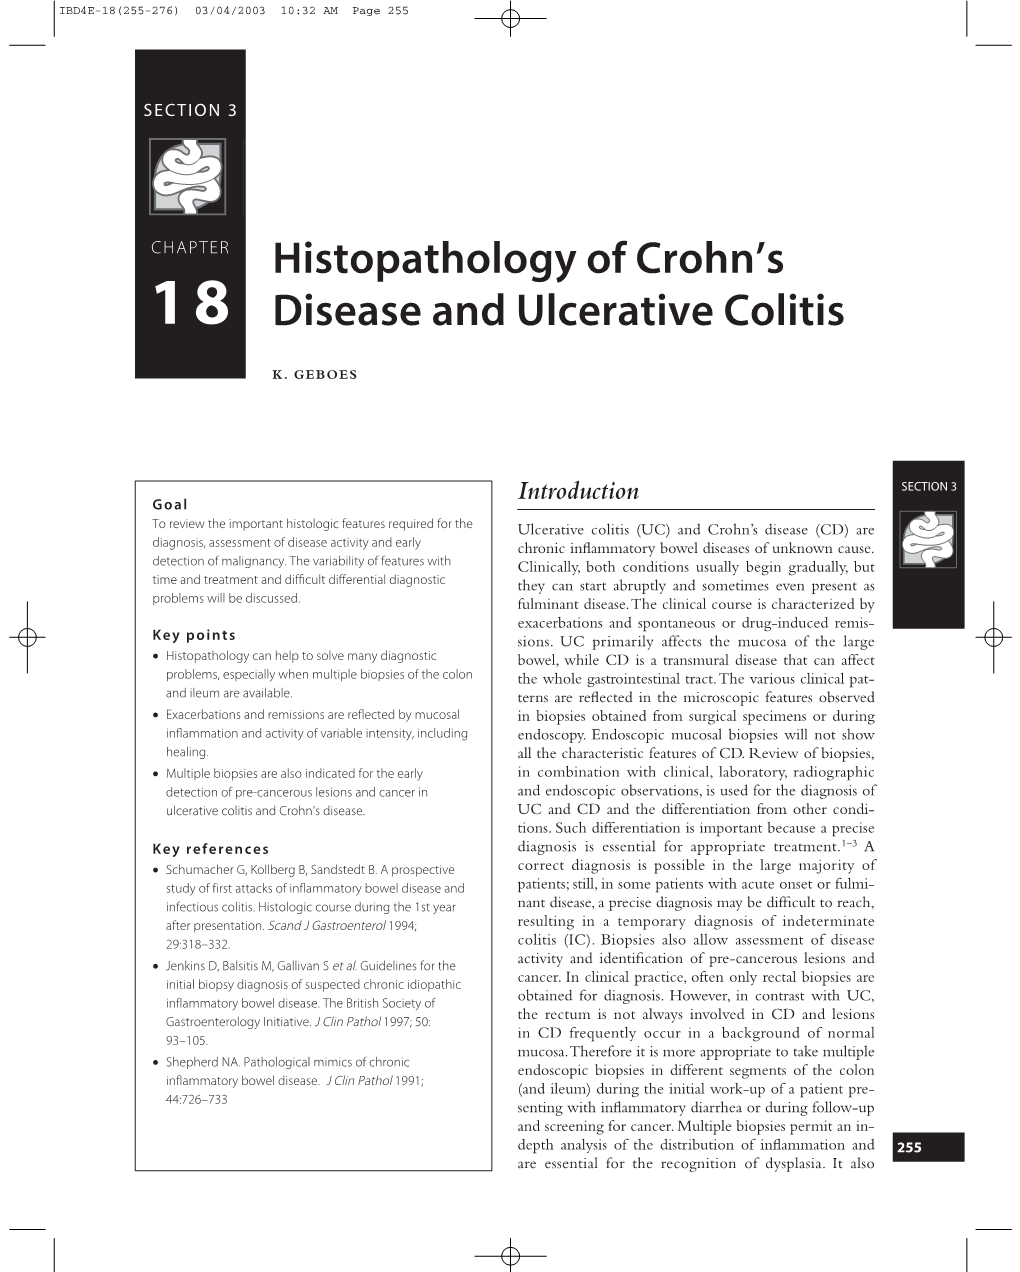 Histopathology of Crohn's Disease and Ulcerative Colitis